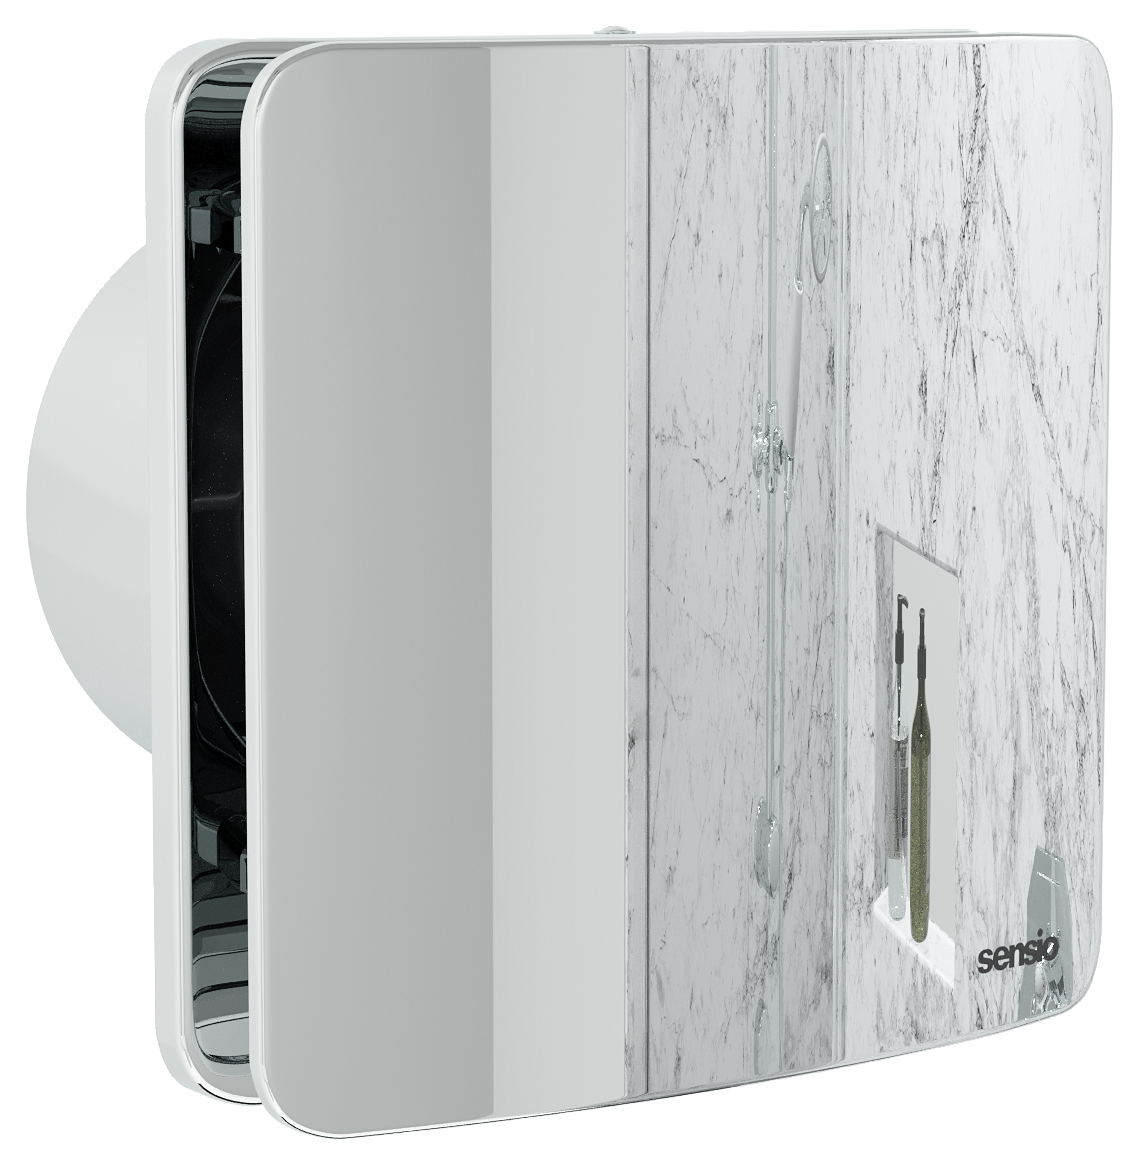 Image of Sensio Rubi Chrome Wall Ventilation Fan with Aquilo Ventilation Ducting Kit - ø100mm